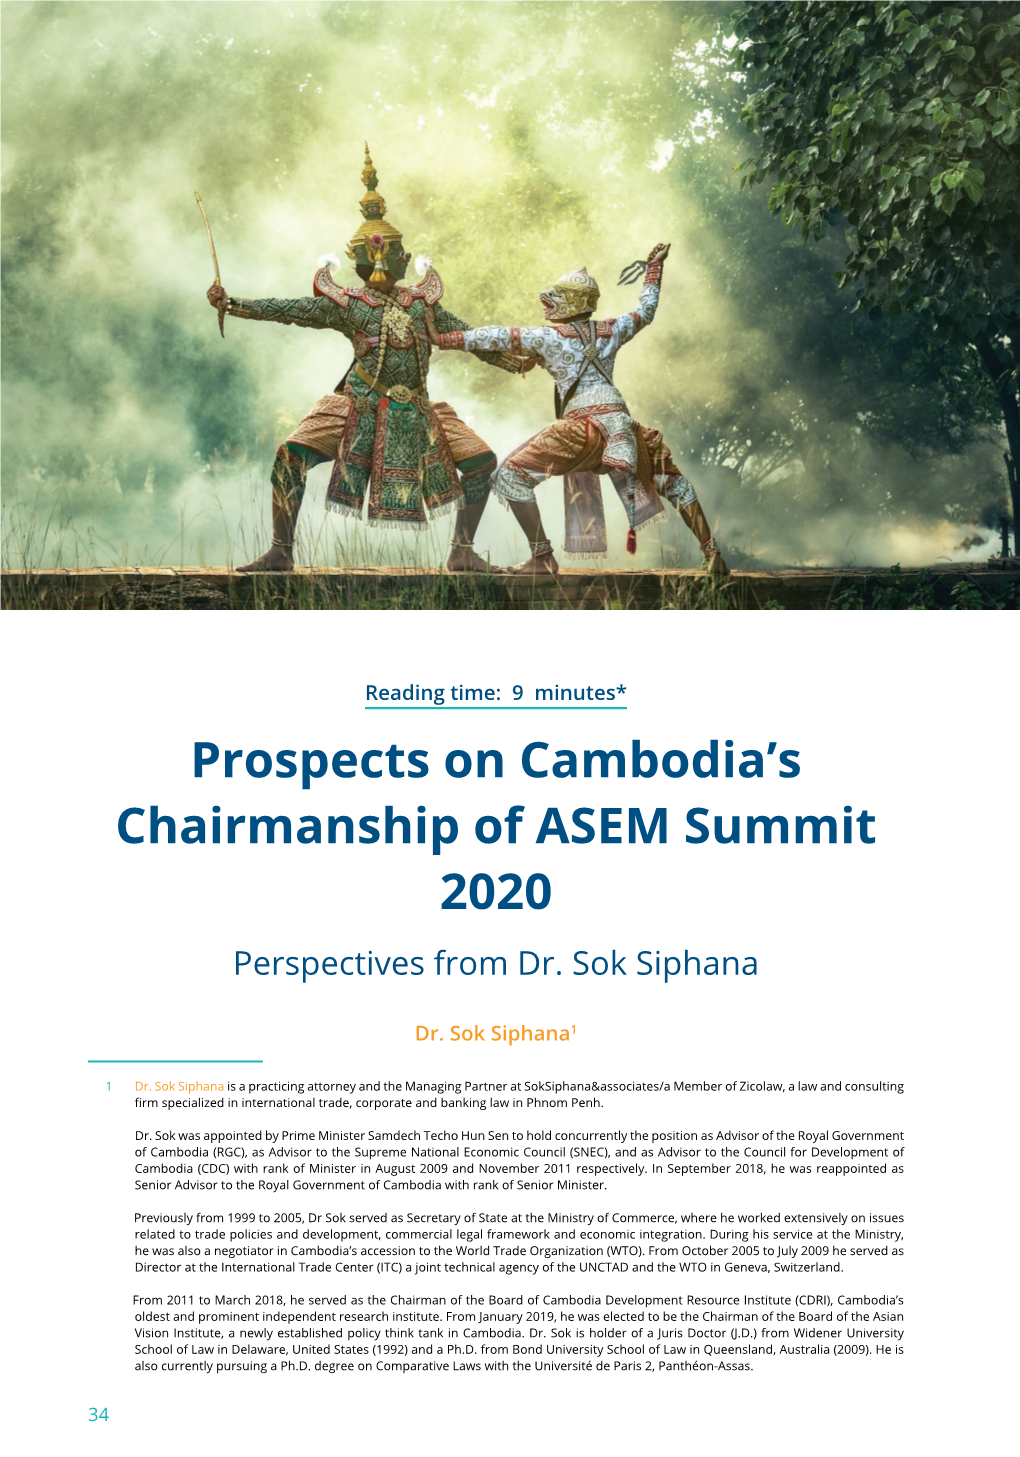 Prospects on Cambodia's Chairmanship of ASEM Summit 2020